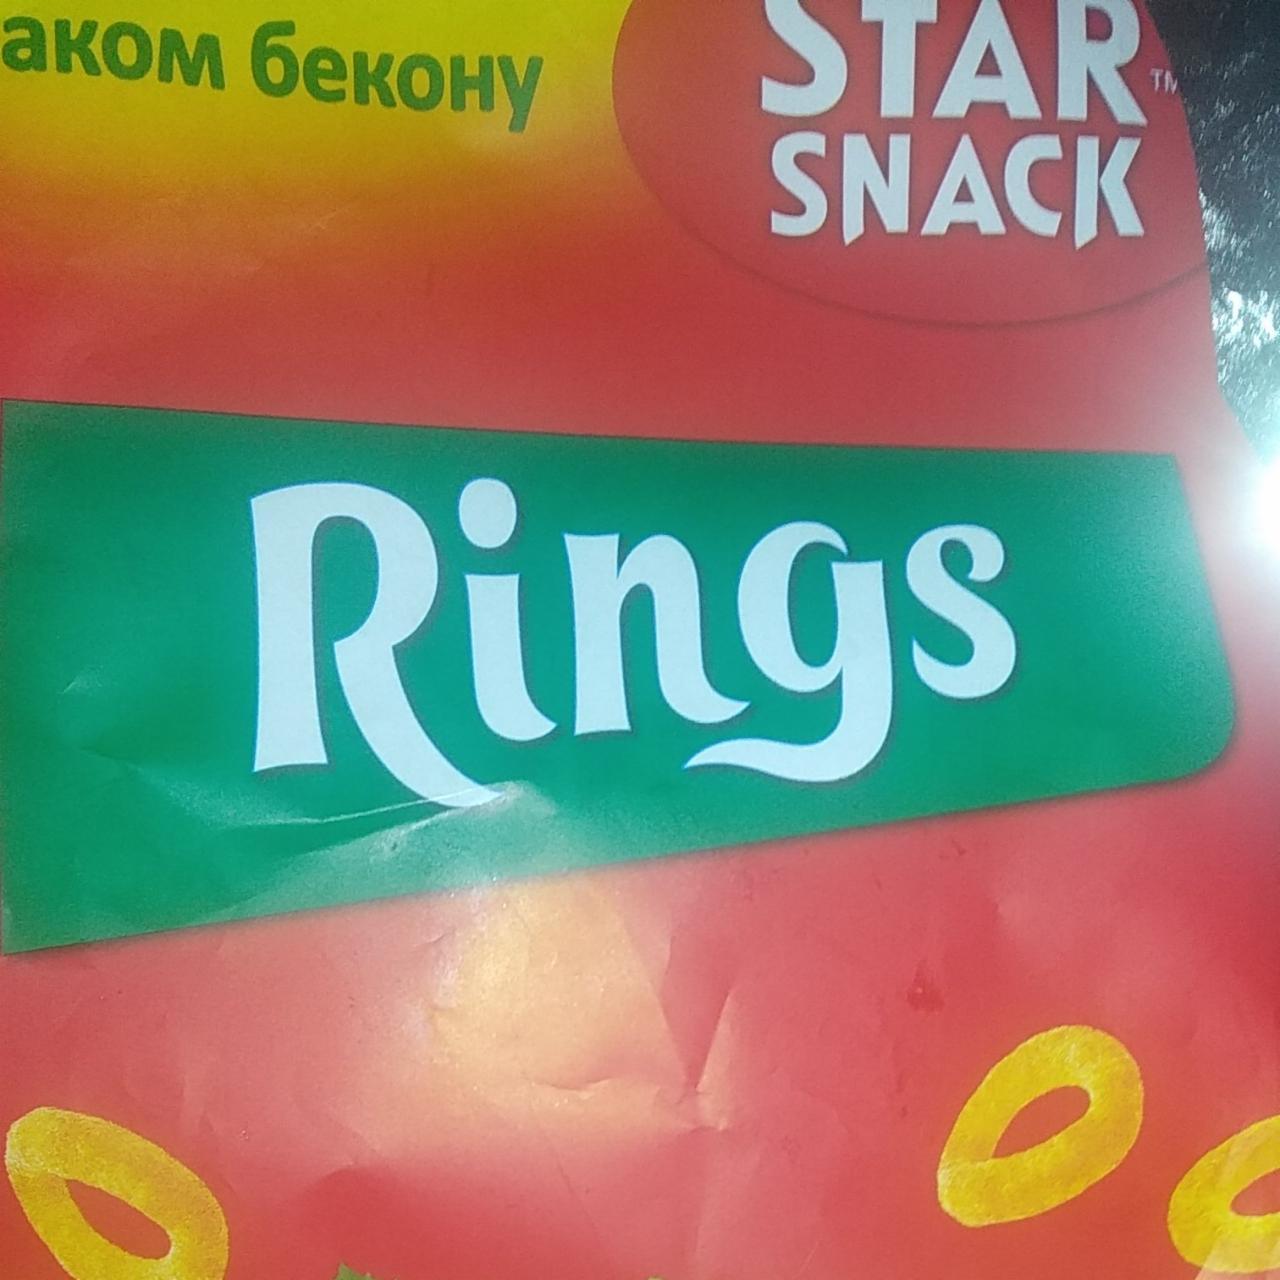 Фото - Rings со вкусом бекна Star Snack